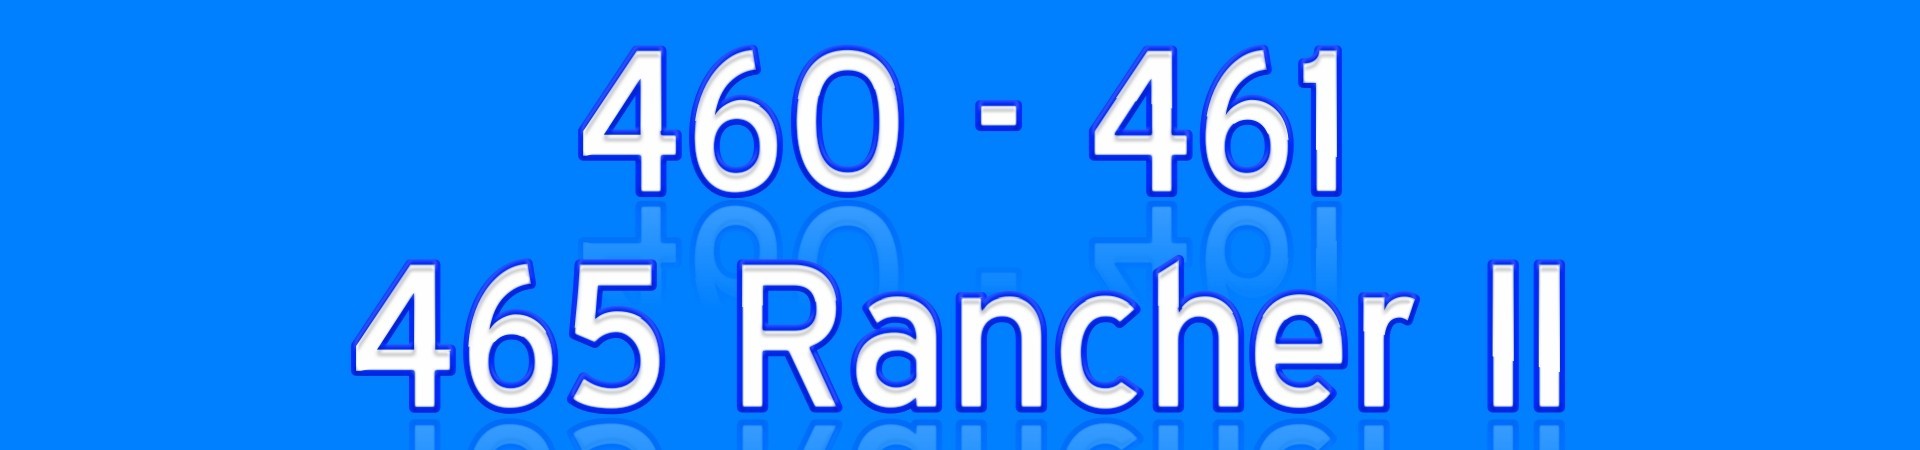 460 461 465 Rancher II